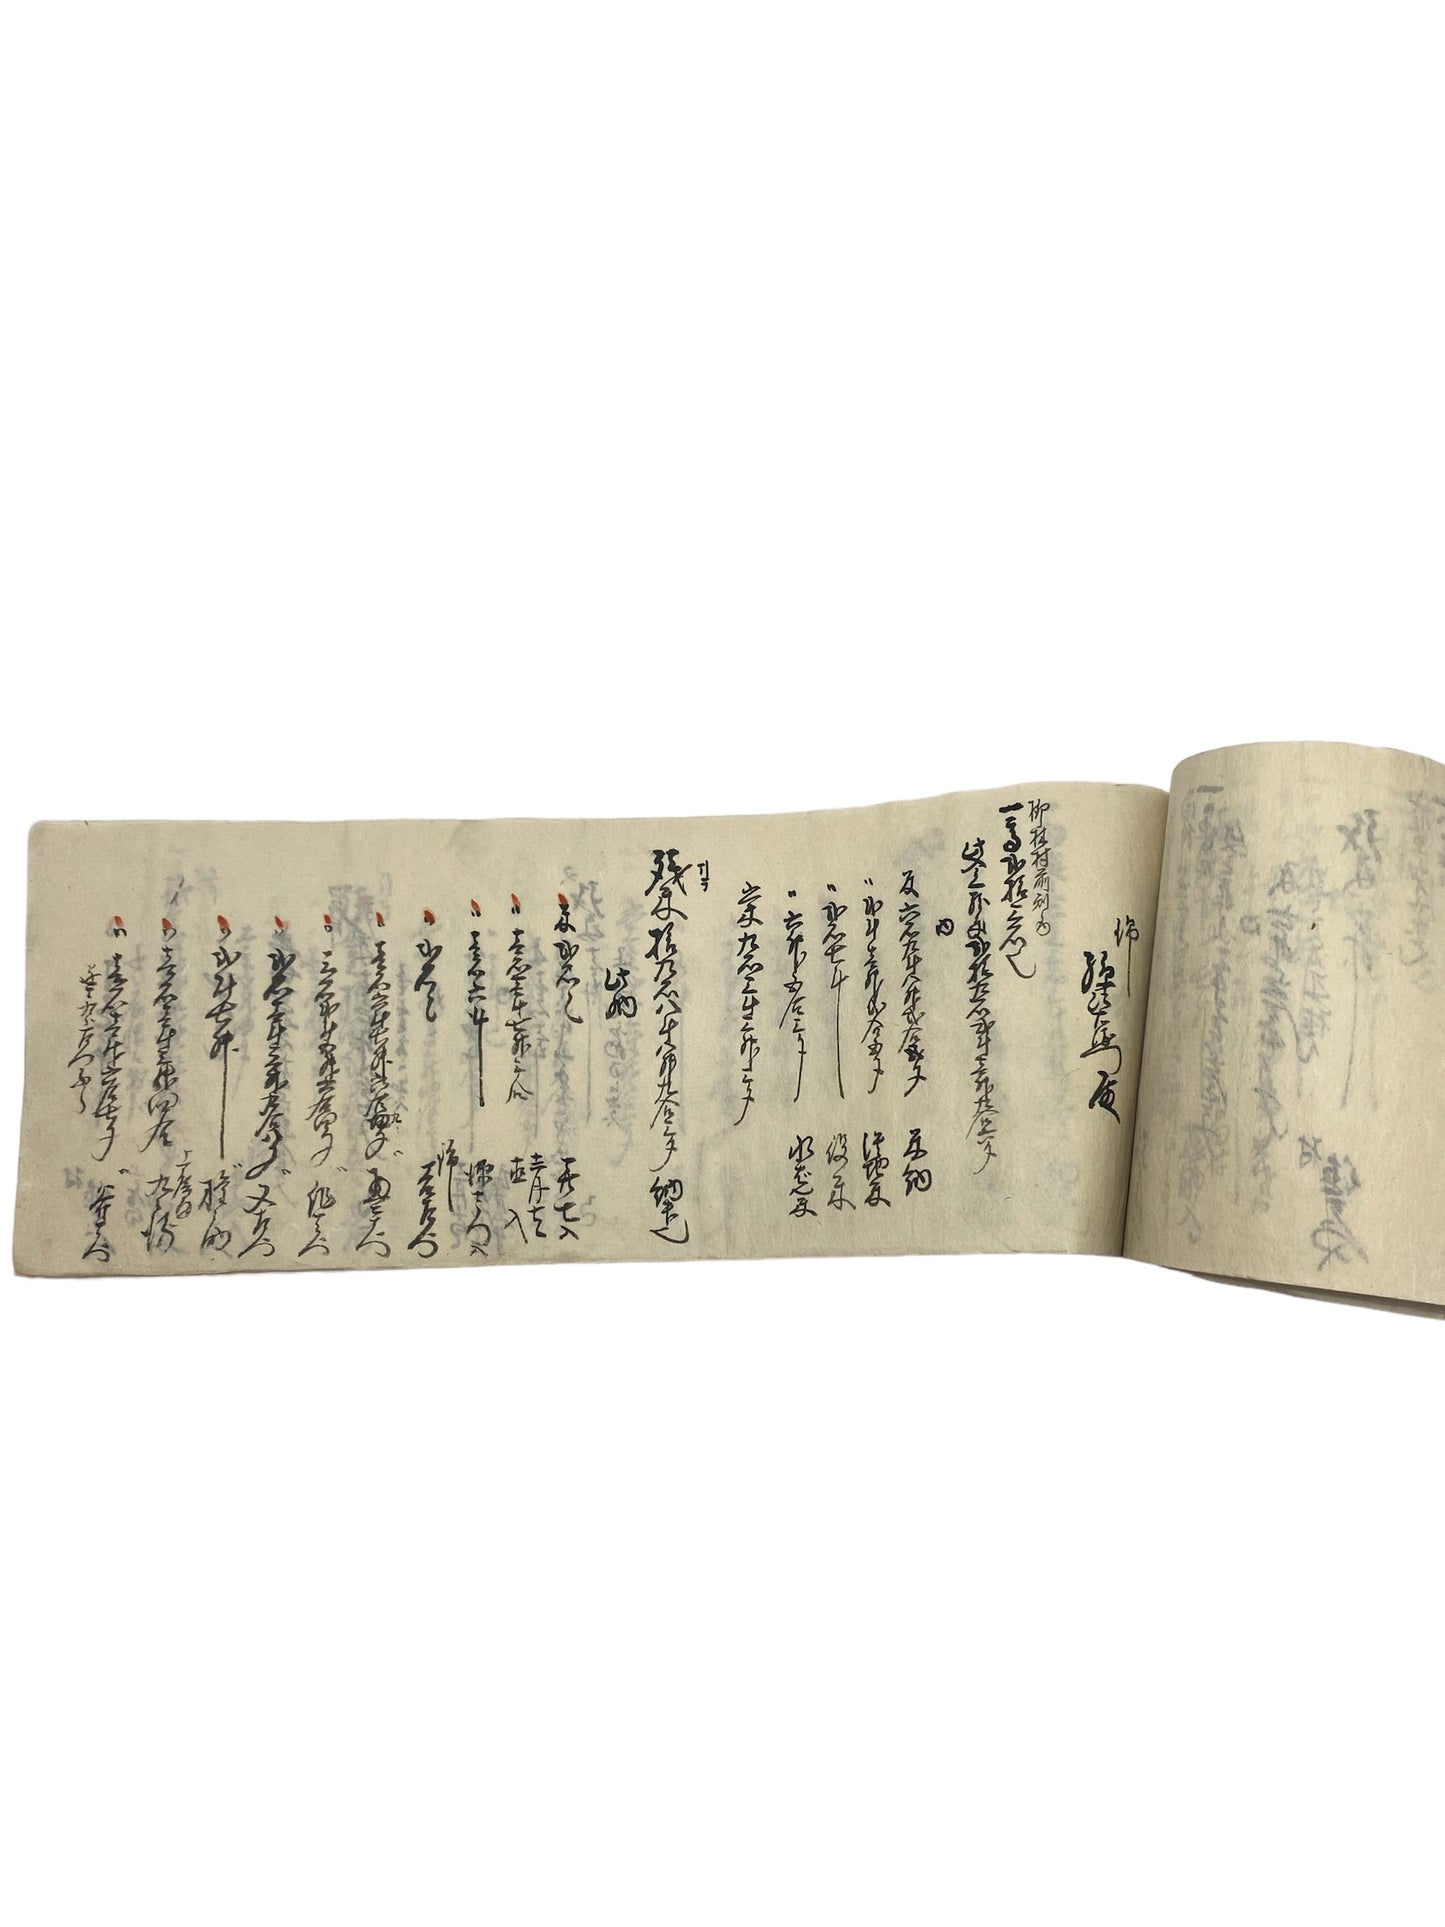 Handwritten merchant shop ledgers from the Edo period 1867